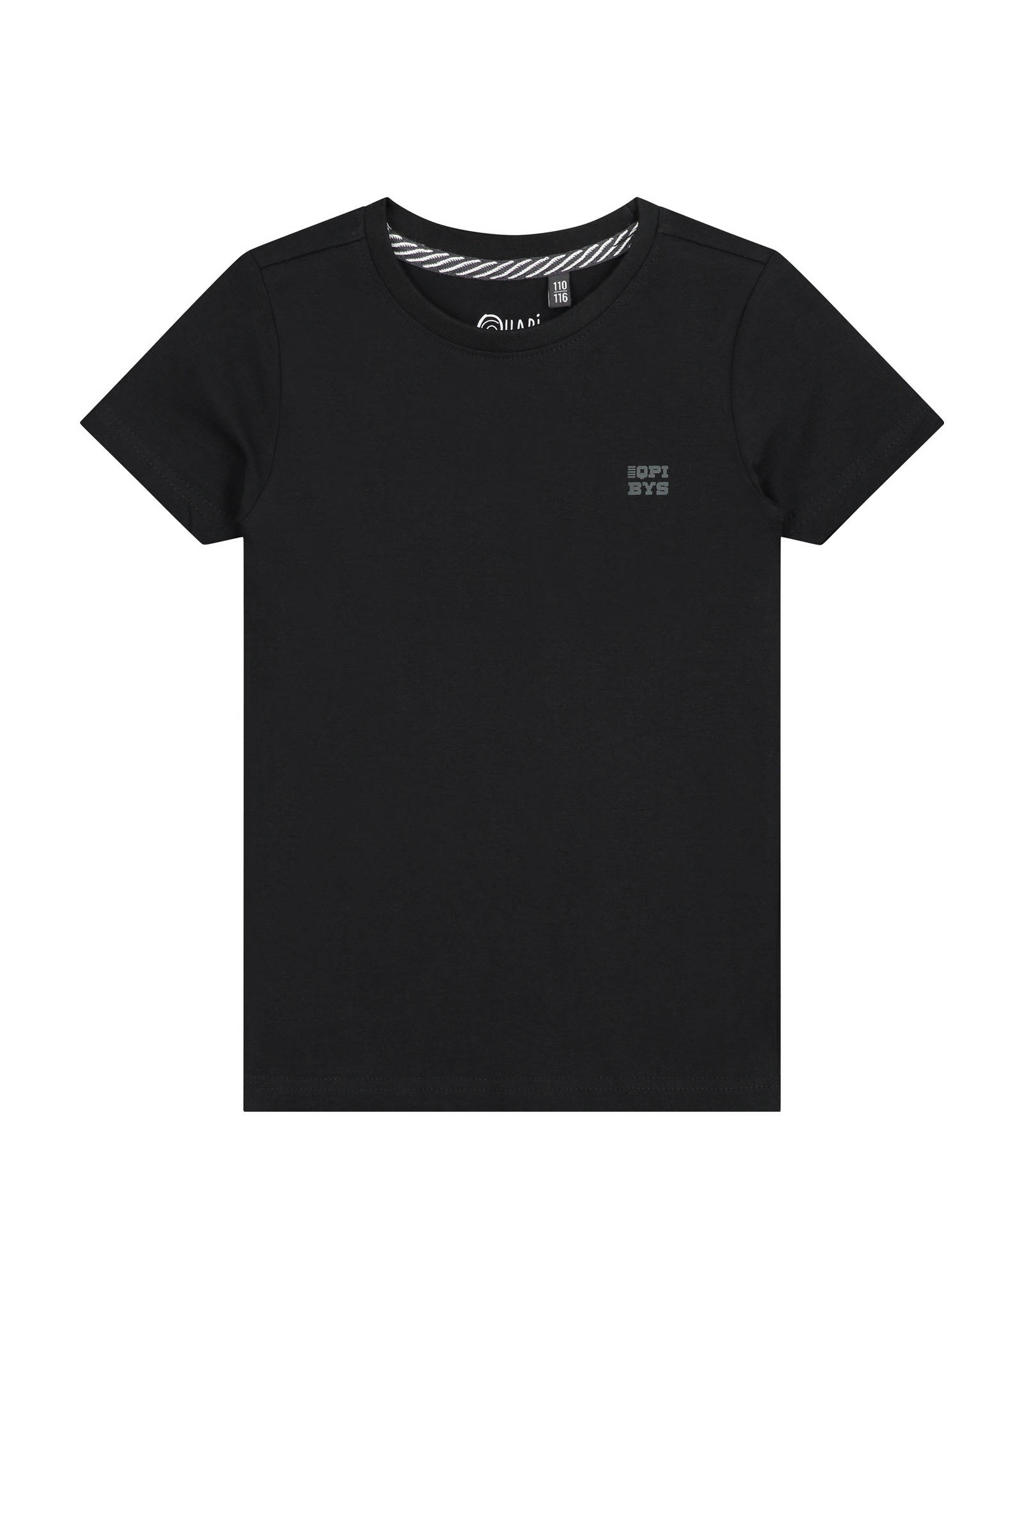 Quapi basic T-shirt Joshua zwart